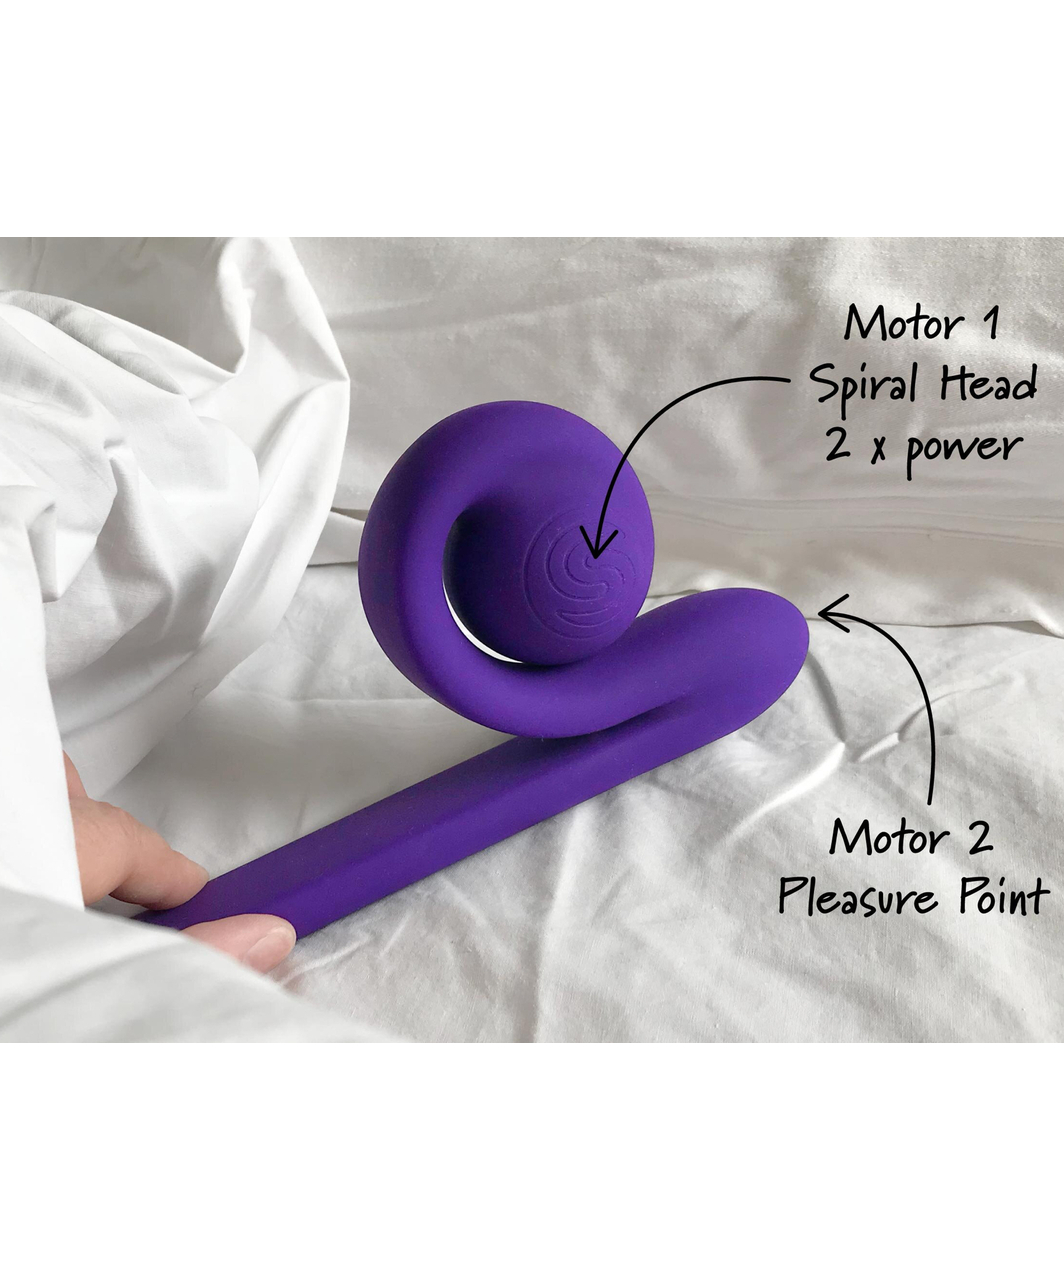 Snail Vibe Slide'n'Roll Dual vibraator